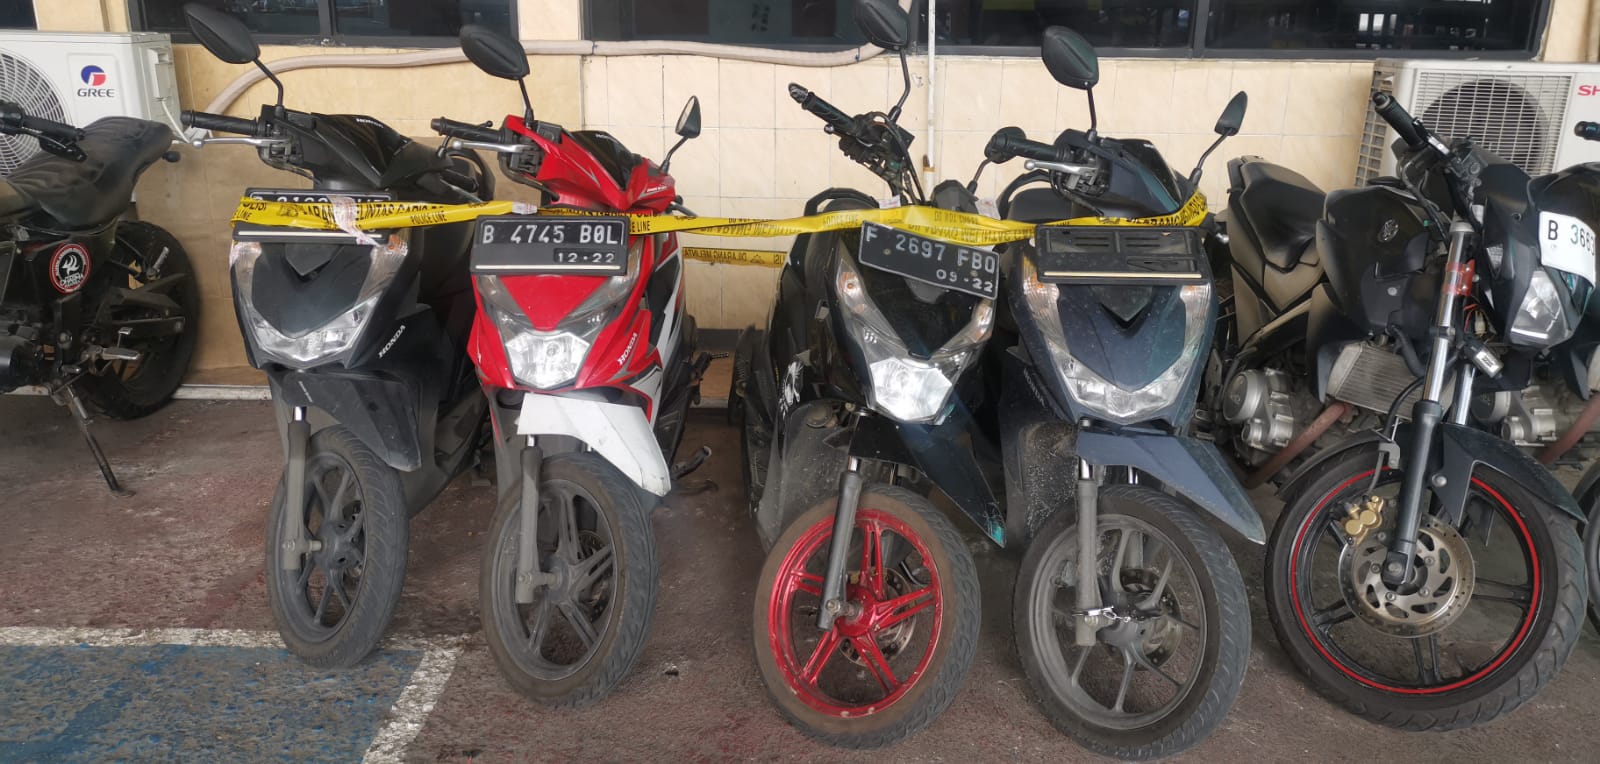 Dua Sekawan Pecandu Narkoba 9 Kali Curi Sepeda Motor di Jakarta Barat, Duitnya Buat Beli Sabu